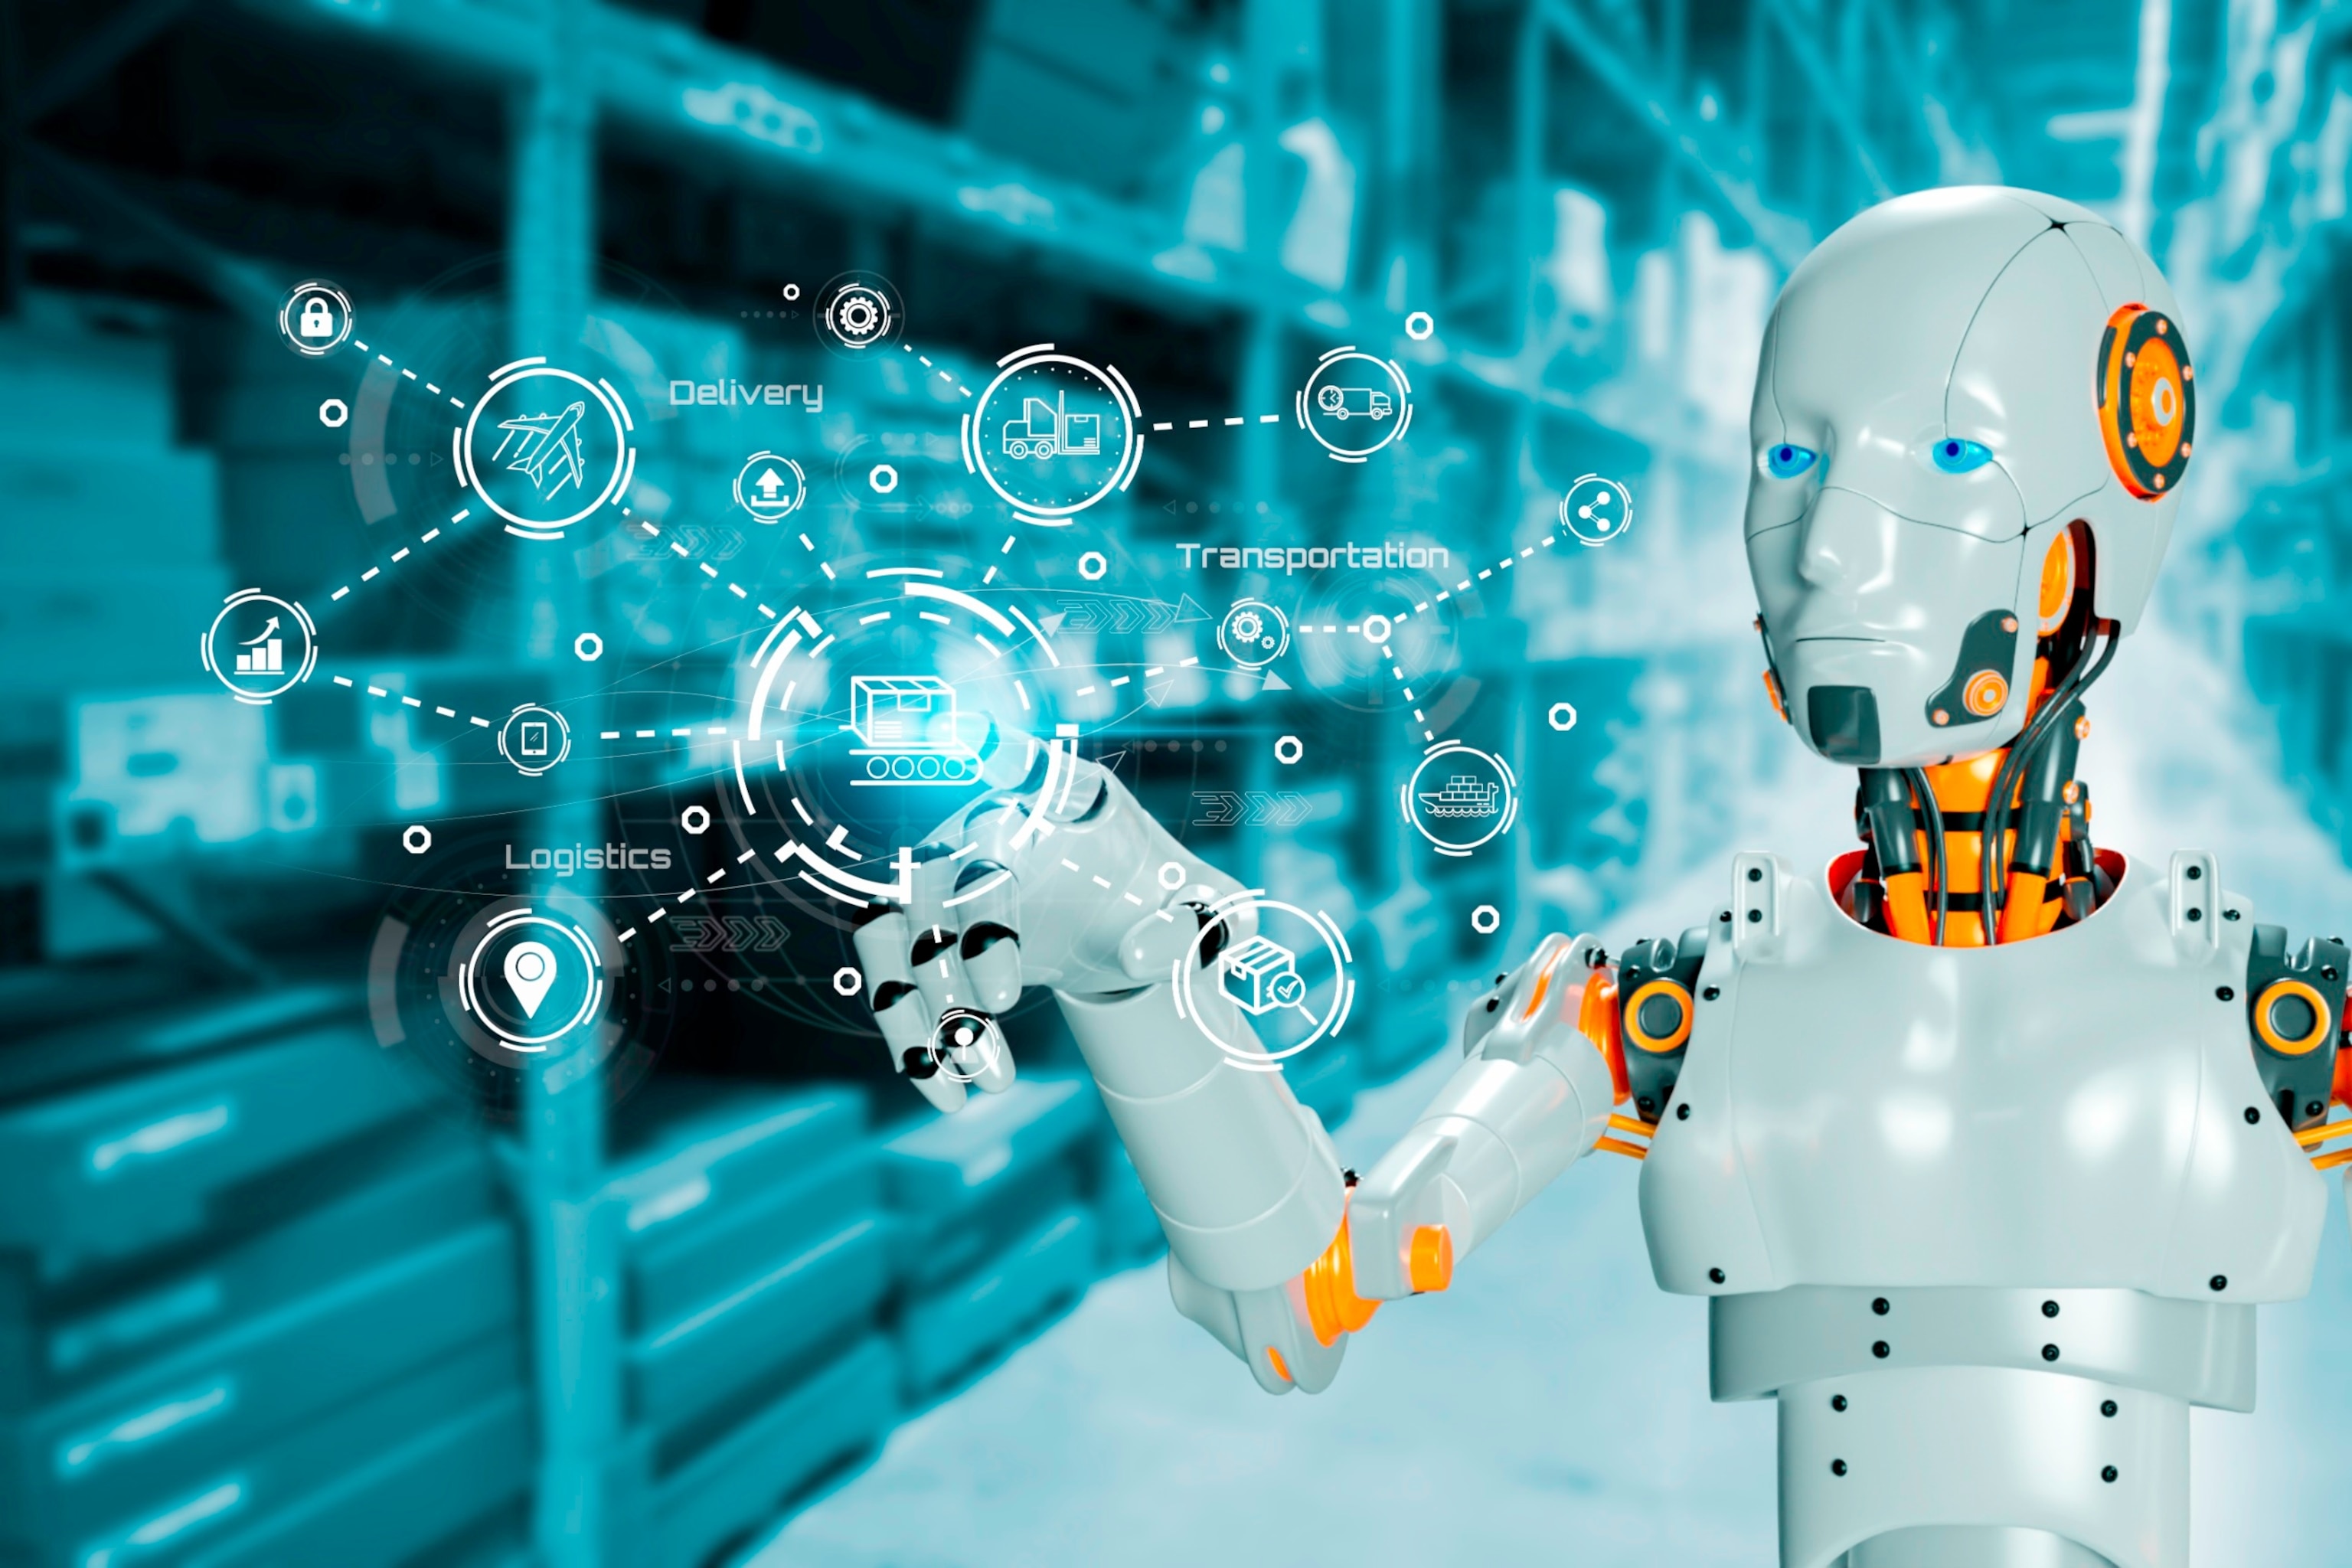 PHOTO: AI technology humanoid robot touch screen UI technology AI interface future warehouse export and import future robot technology in this undated stock photo.